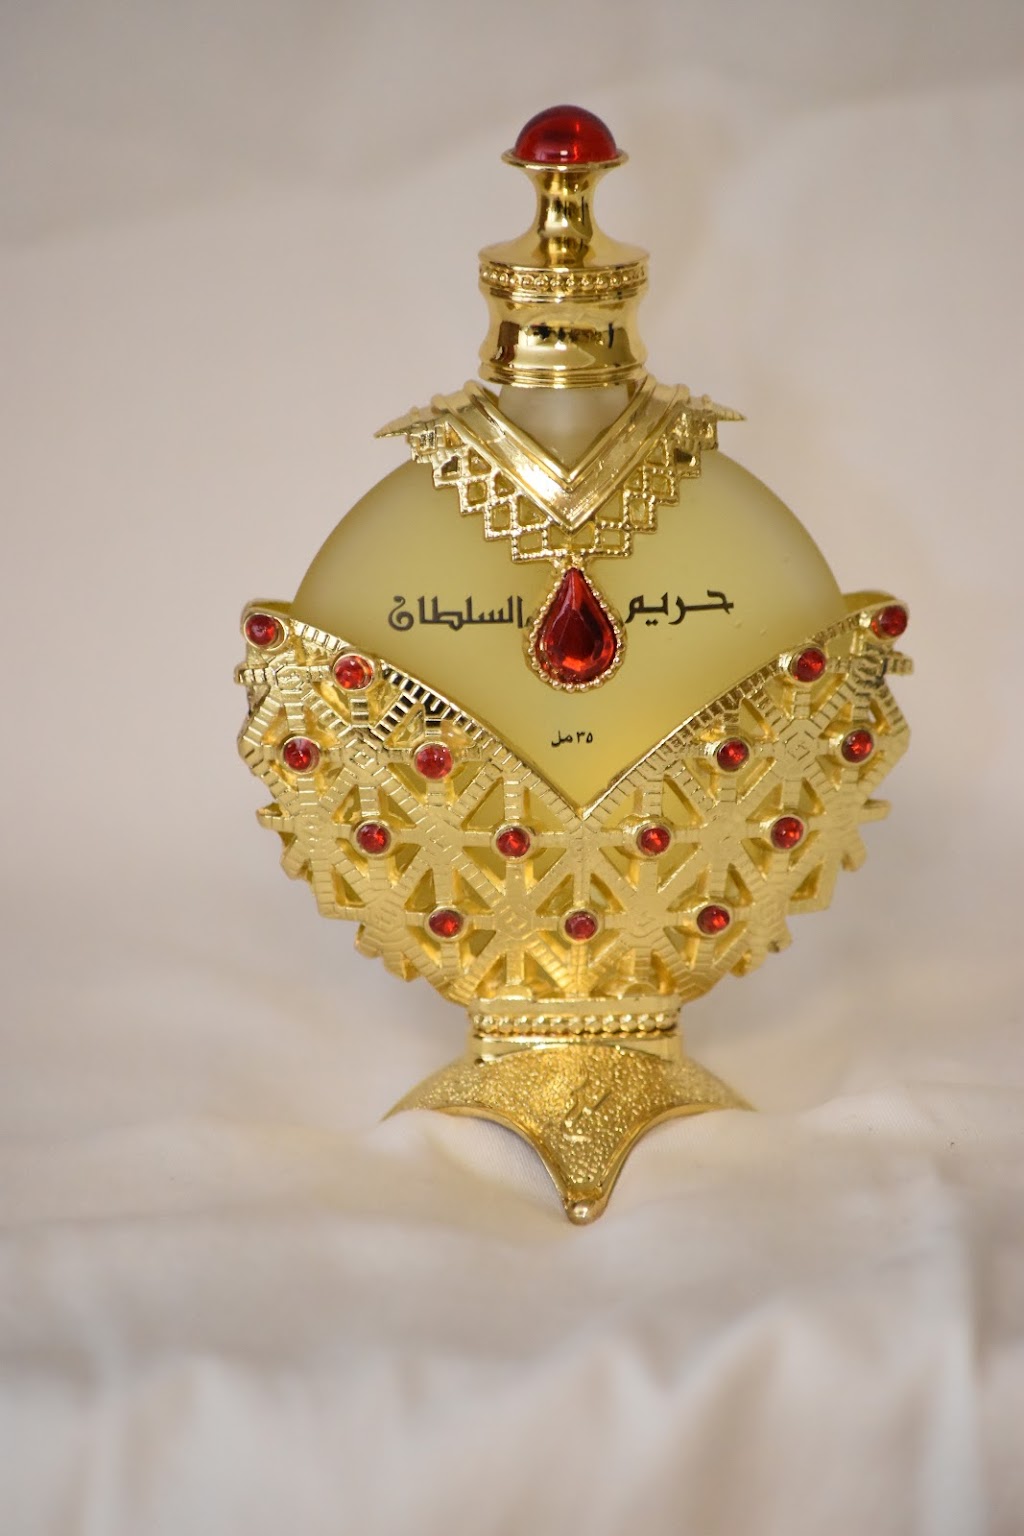 Al Sunnah Fragrances - Arab perfumes | khadlaj brand | St Marc Cir, South Windsor, CT 06074 | Phone: (860) 386-8804